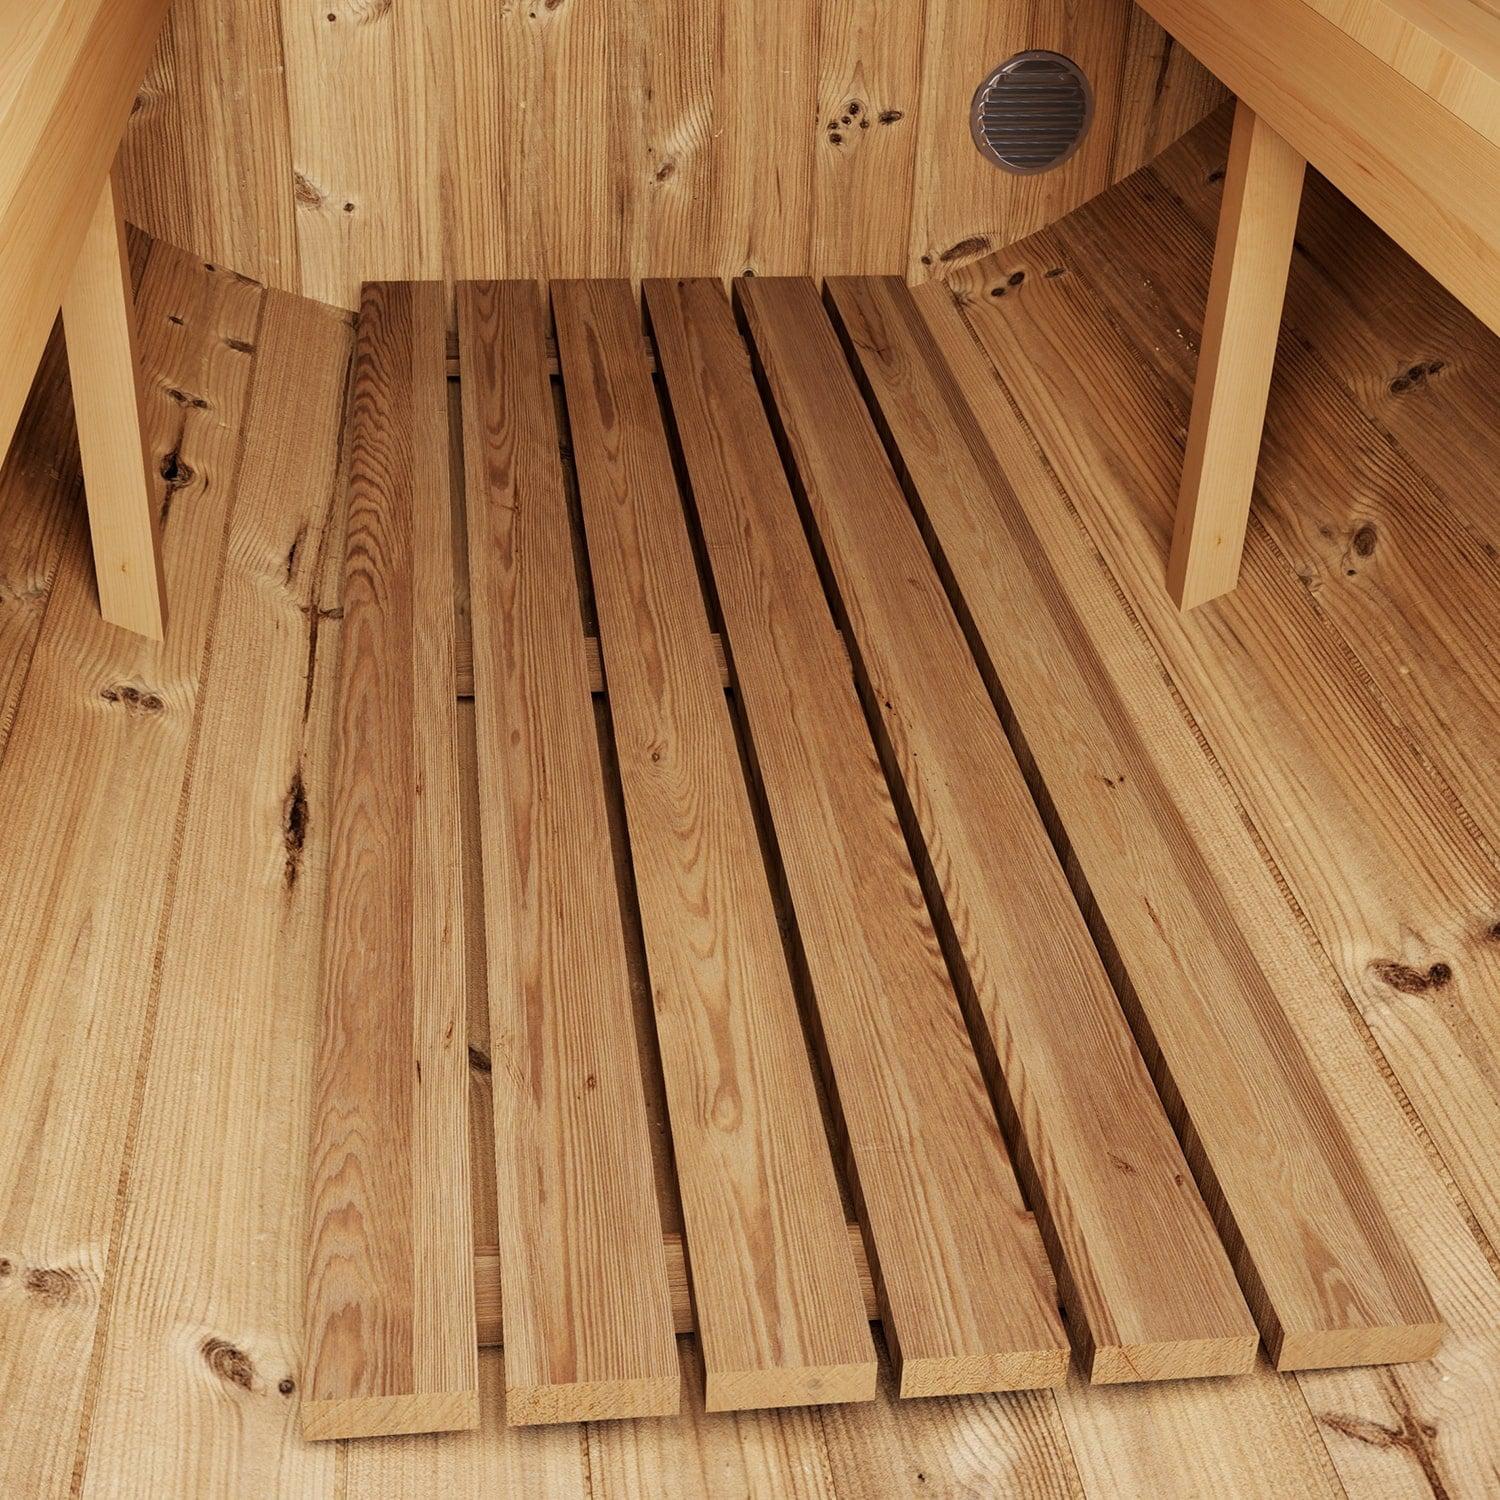 SaunaLife E6 Sauna Barrel Floor - Purely Relaxation